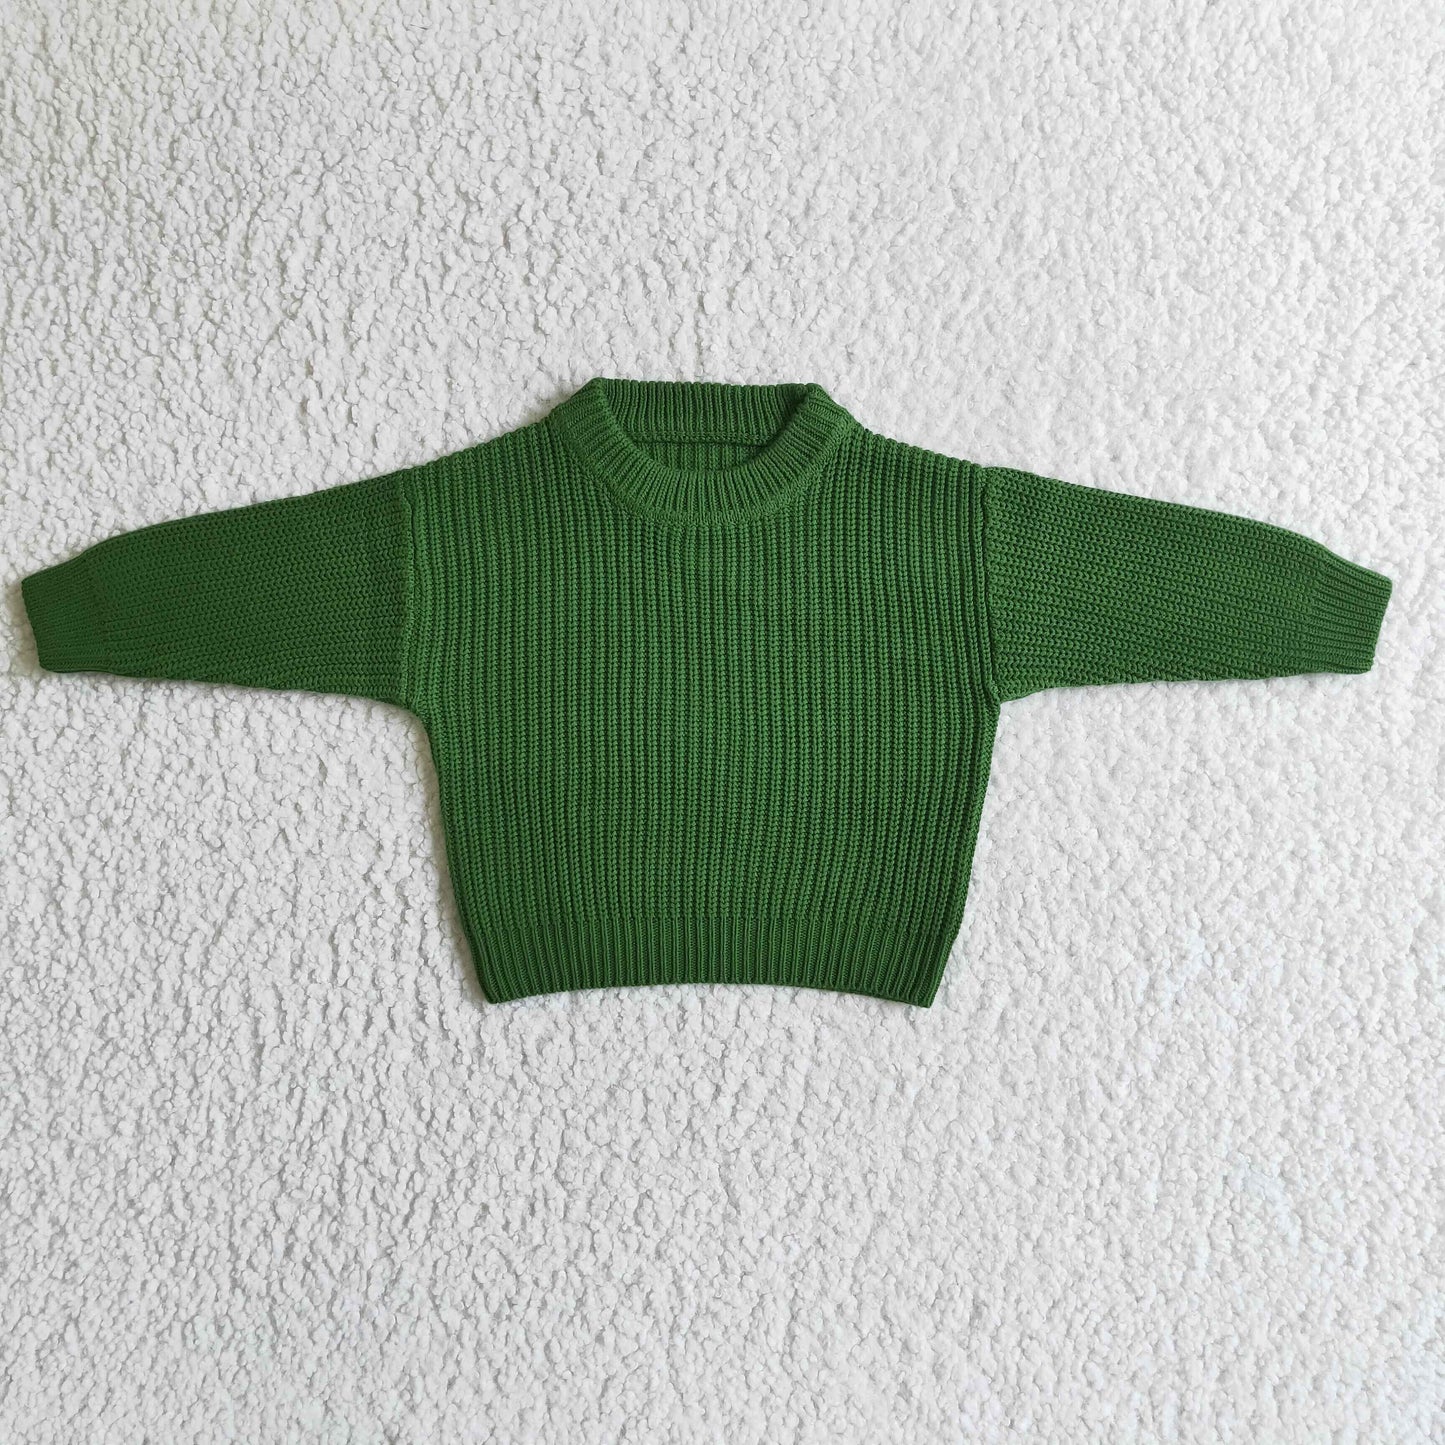 GT0029 Black Baby Knit Sweater